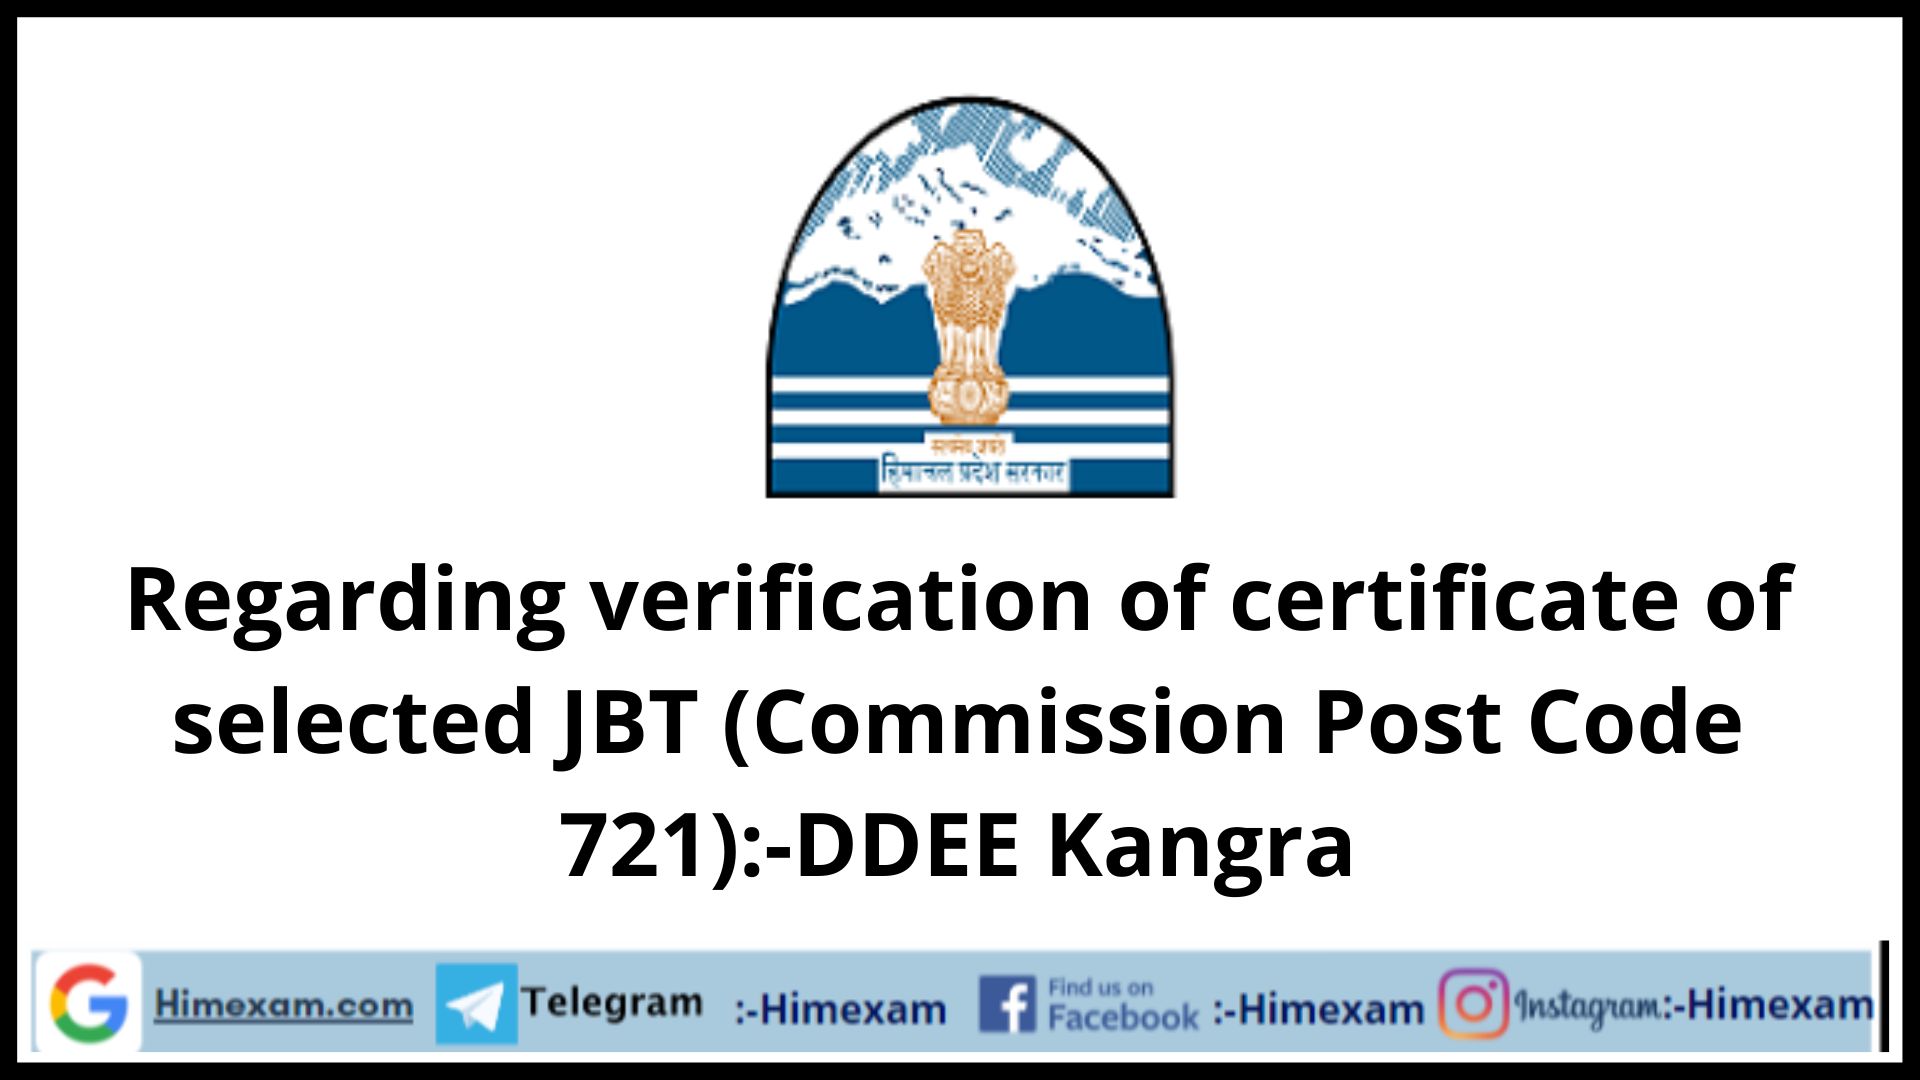 Regarding verification of certificate of selected JBT (Commission Post Code 721):-DDEE Kangra